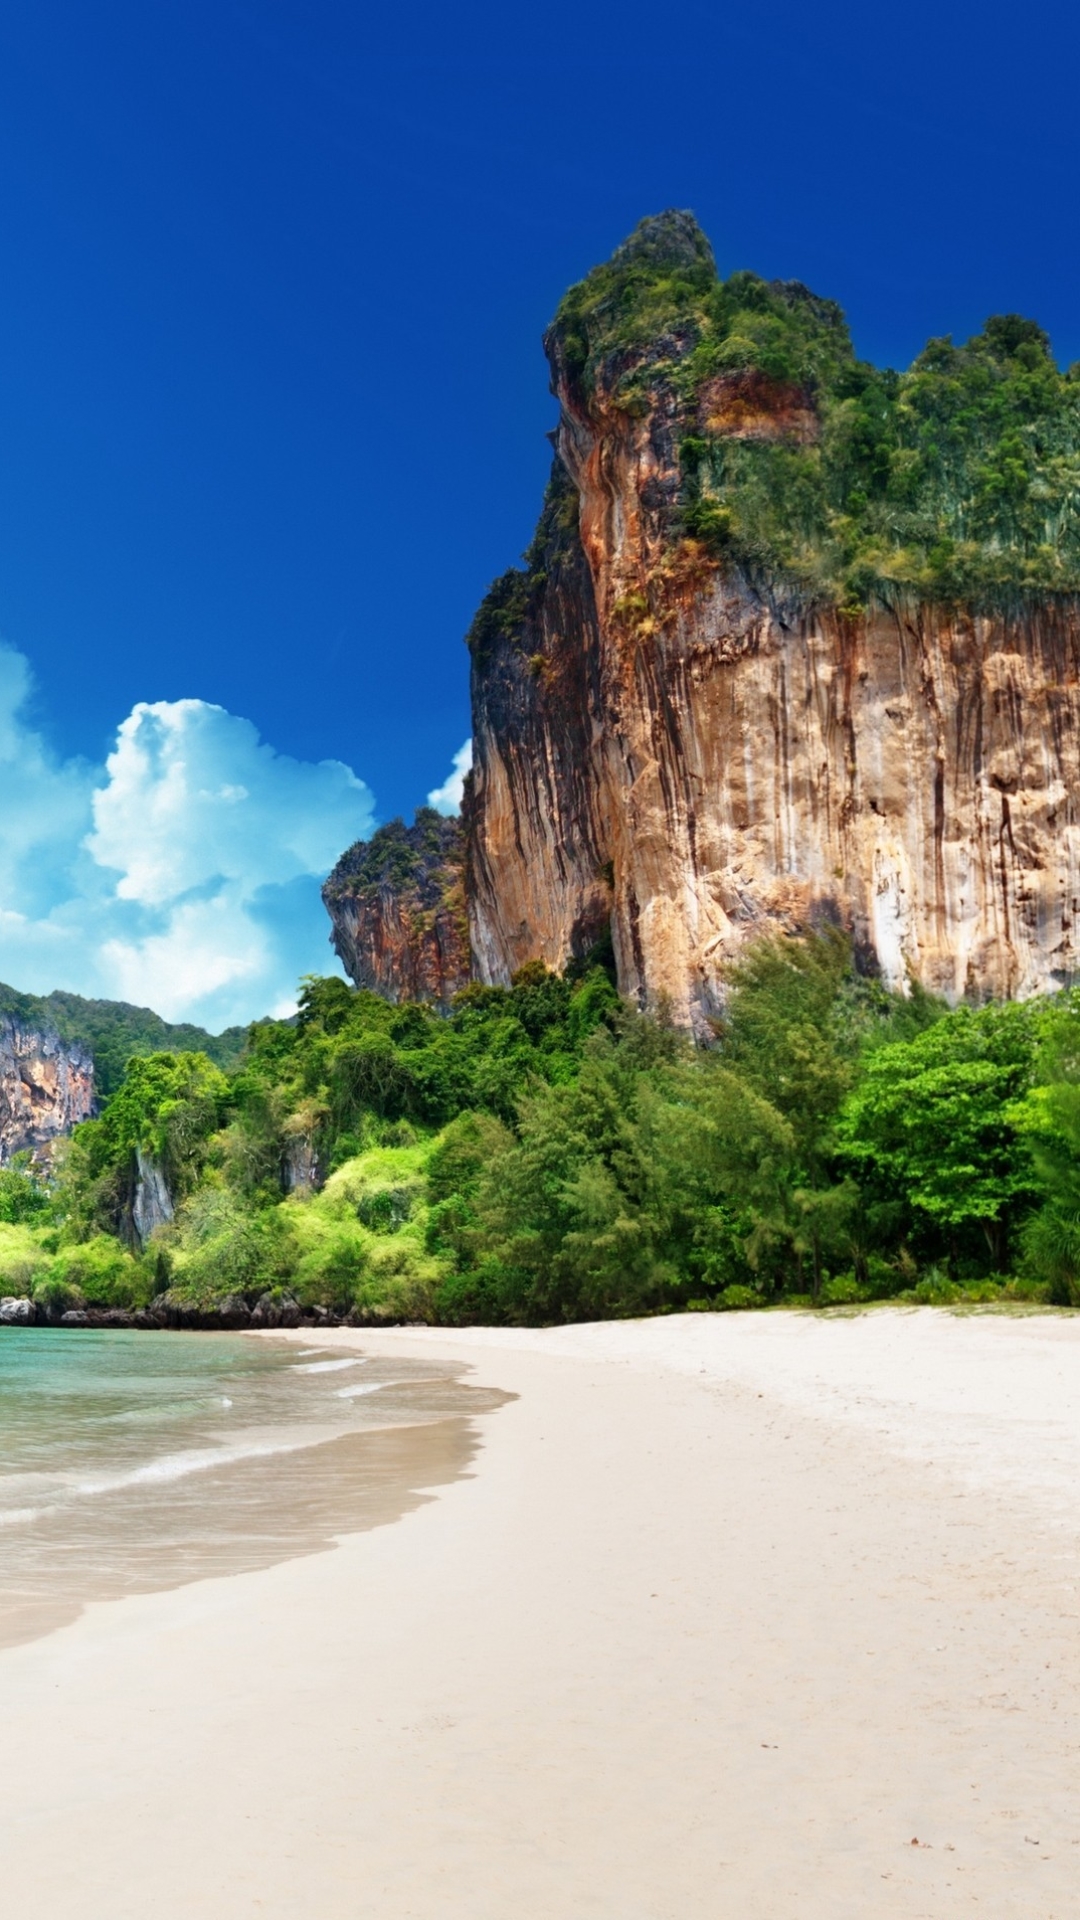 Descarga gratuita de fondo de pantalla para móvil de Naturaleza, Playa, Acantilado, Zona Tropical, Fotografía, Tailandia, Tropico.